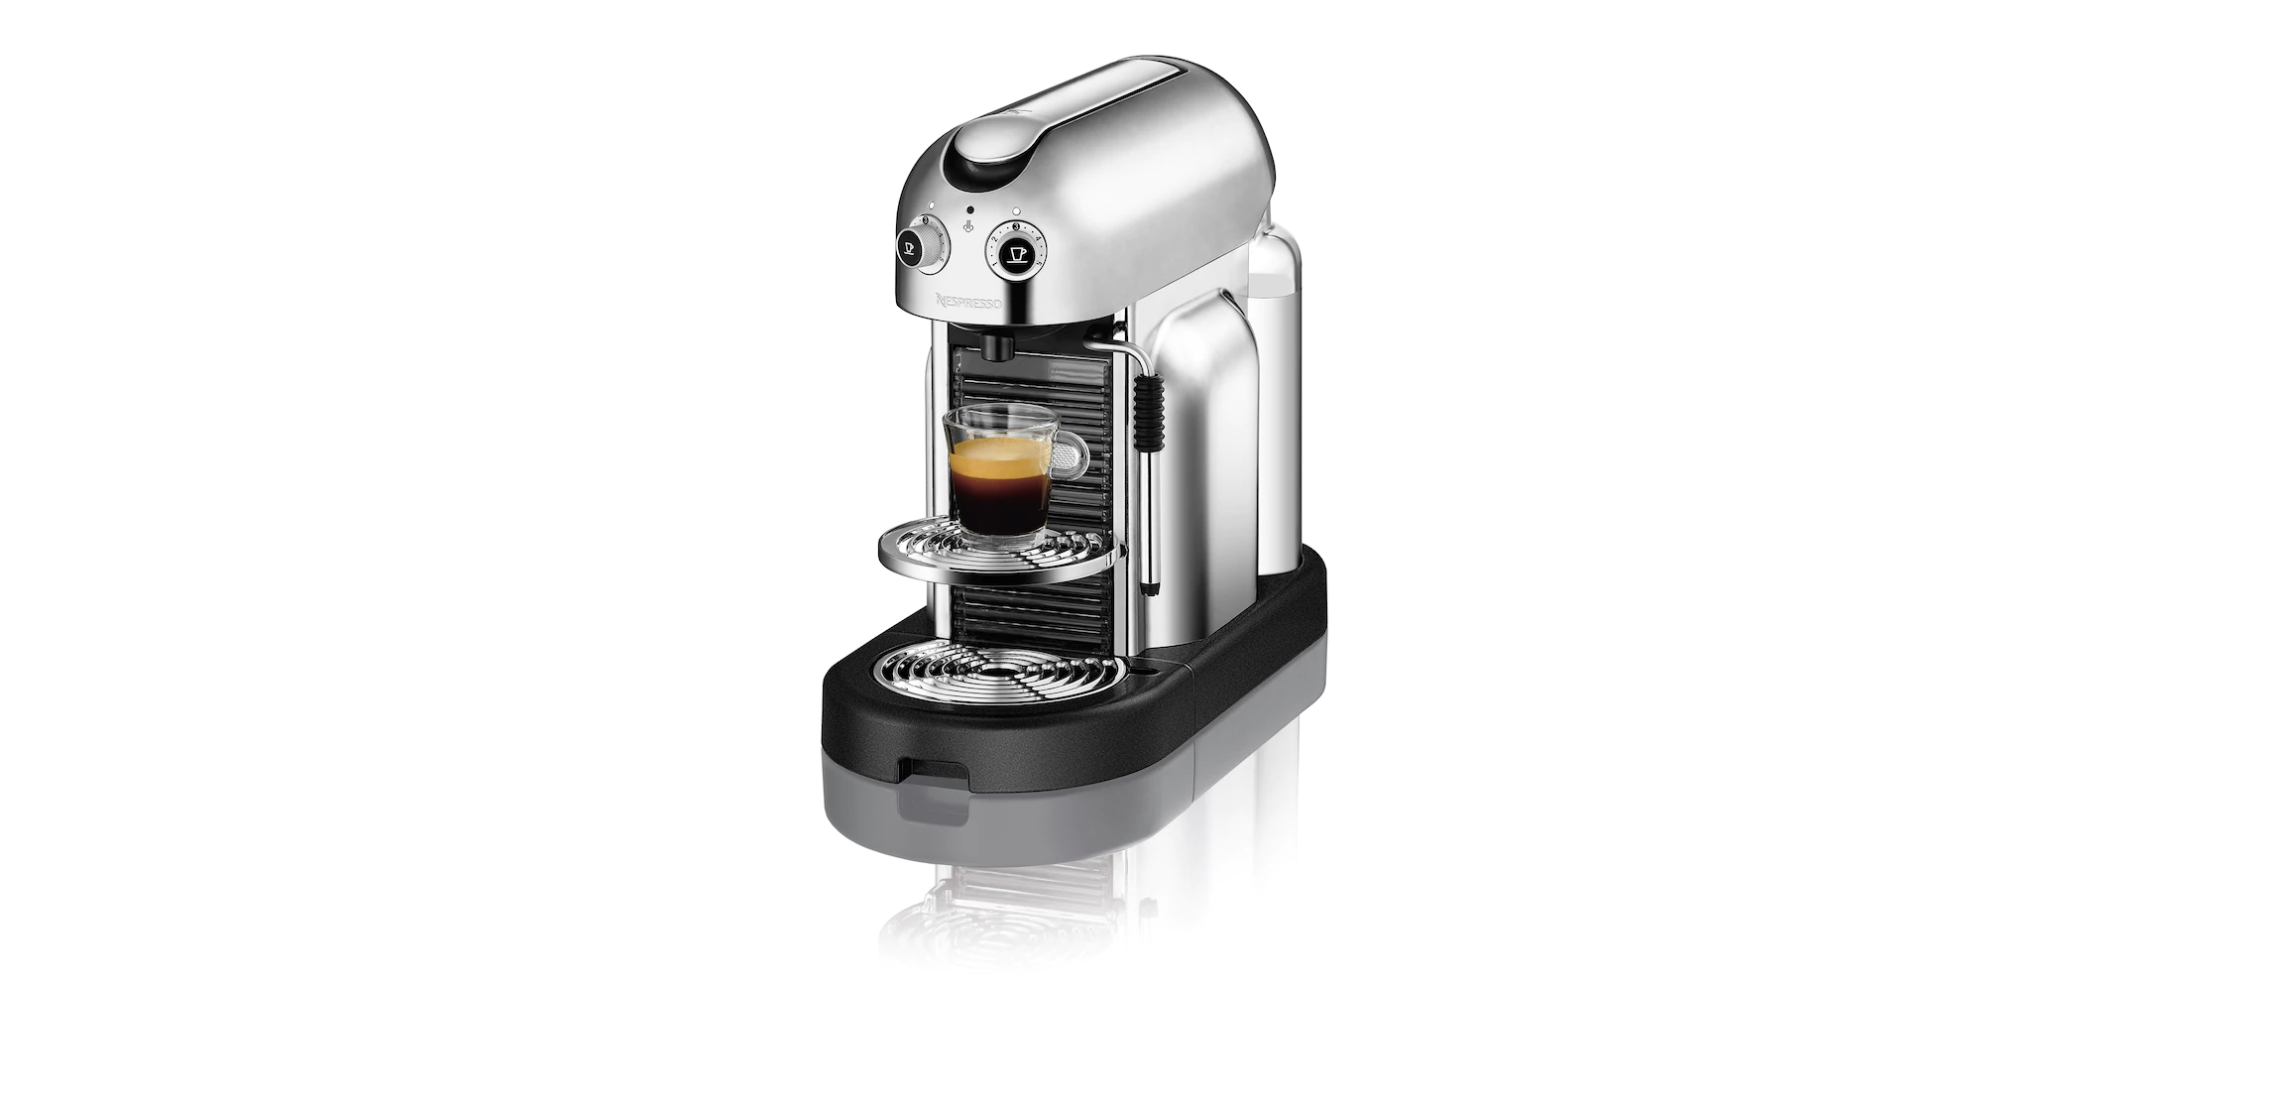 The Maestria machine brings to homes art of coffee making a barista | Nestlé Nespresso